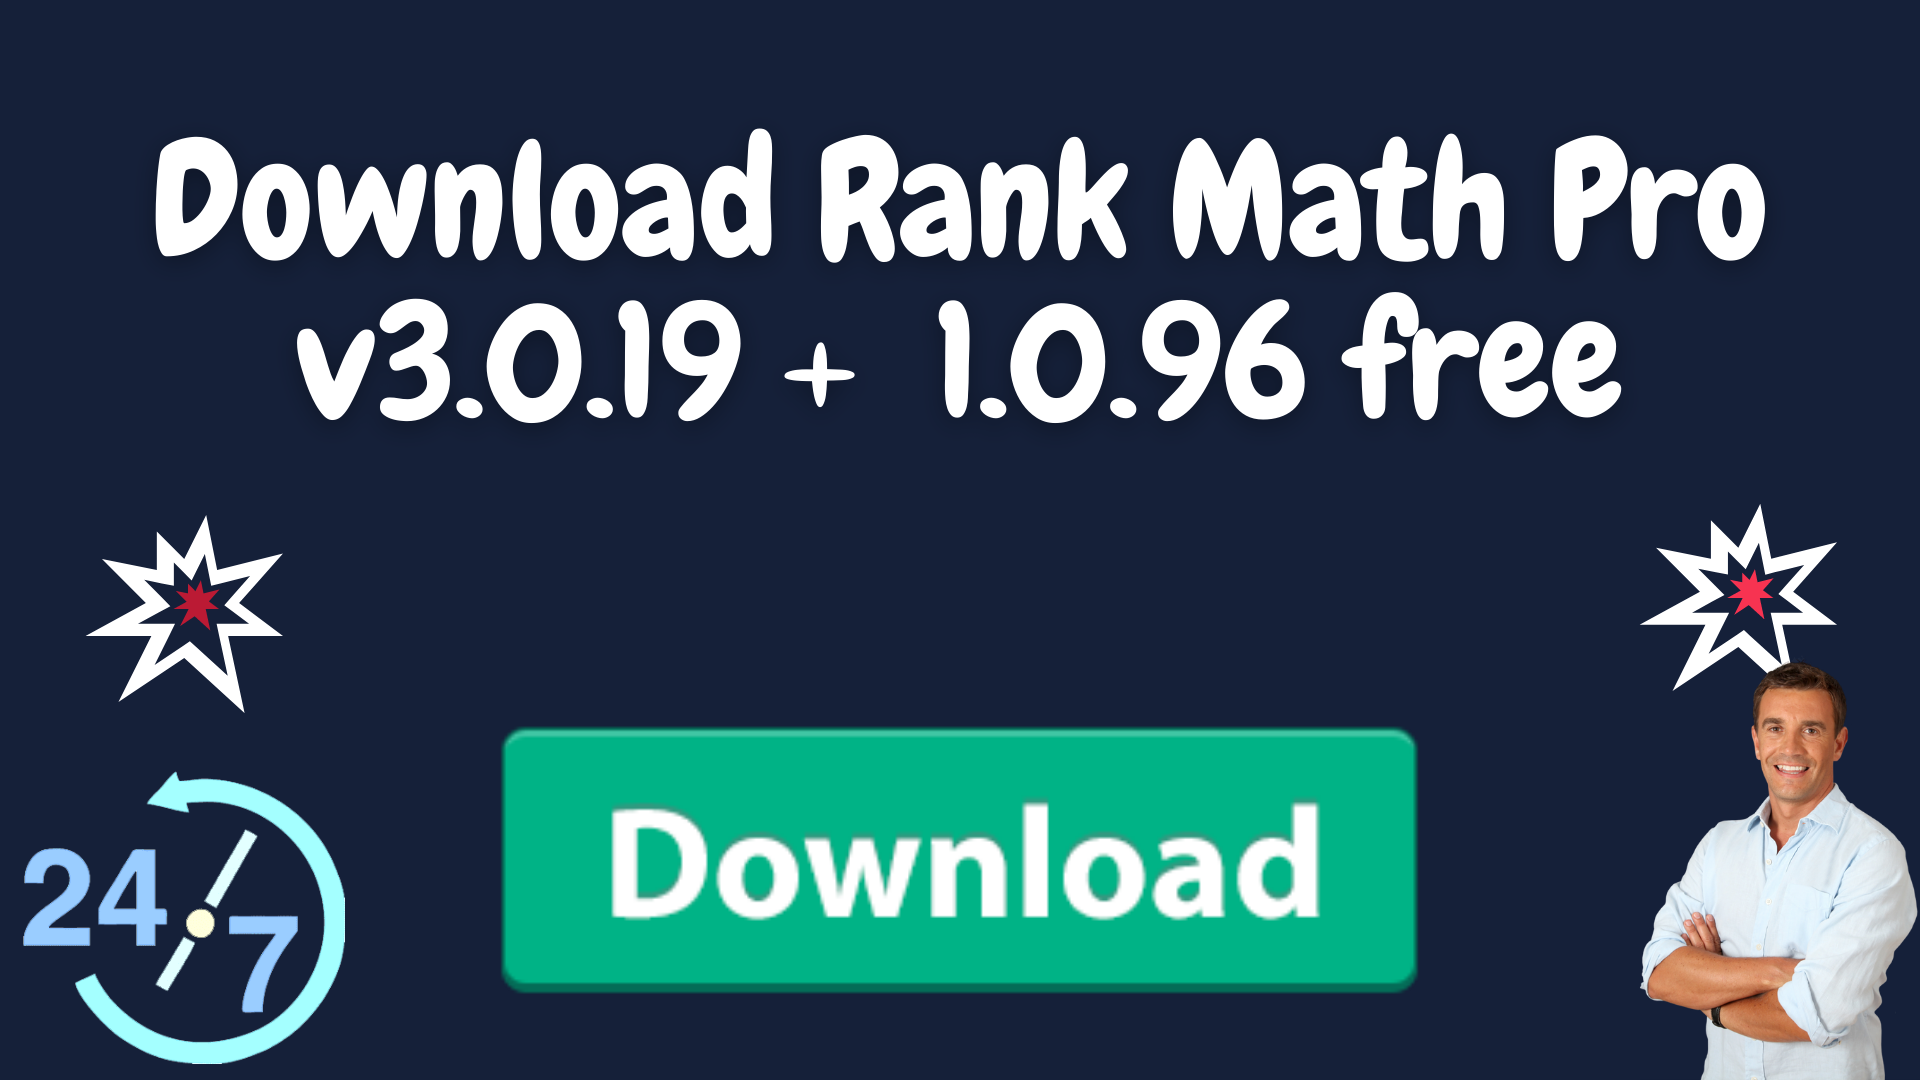 Download Rank Math Pro V3.0.19 + 1.0.96 Free